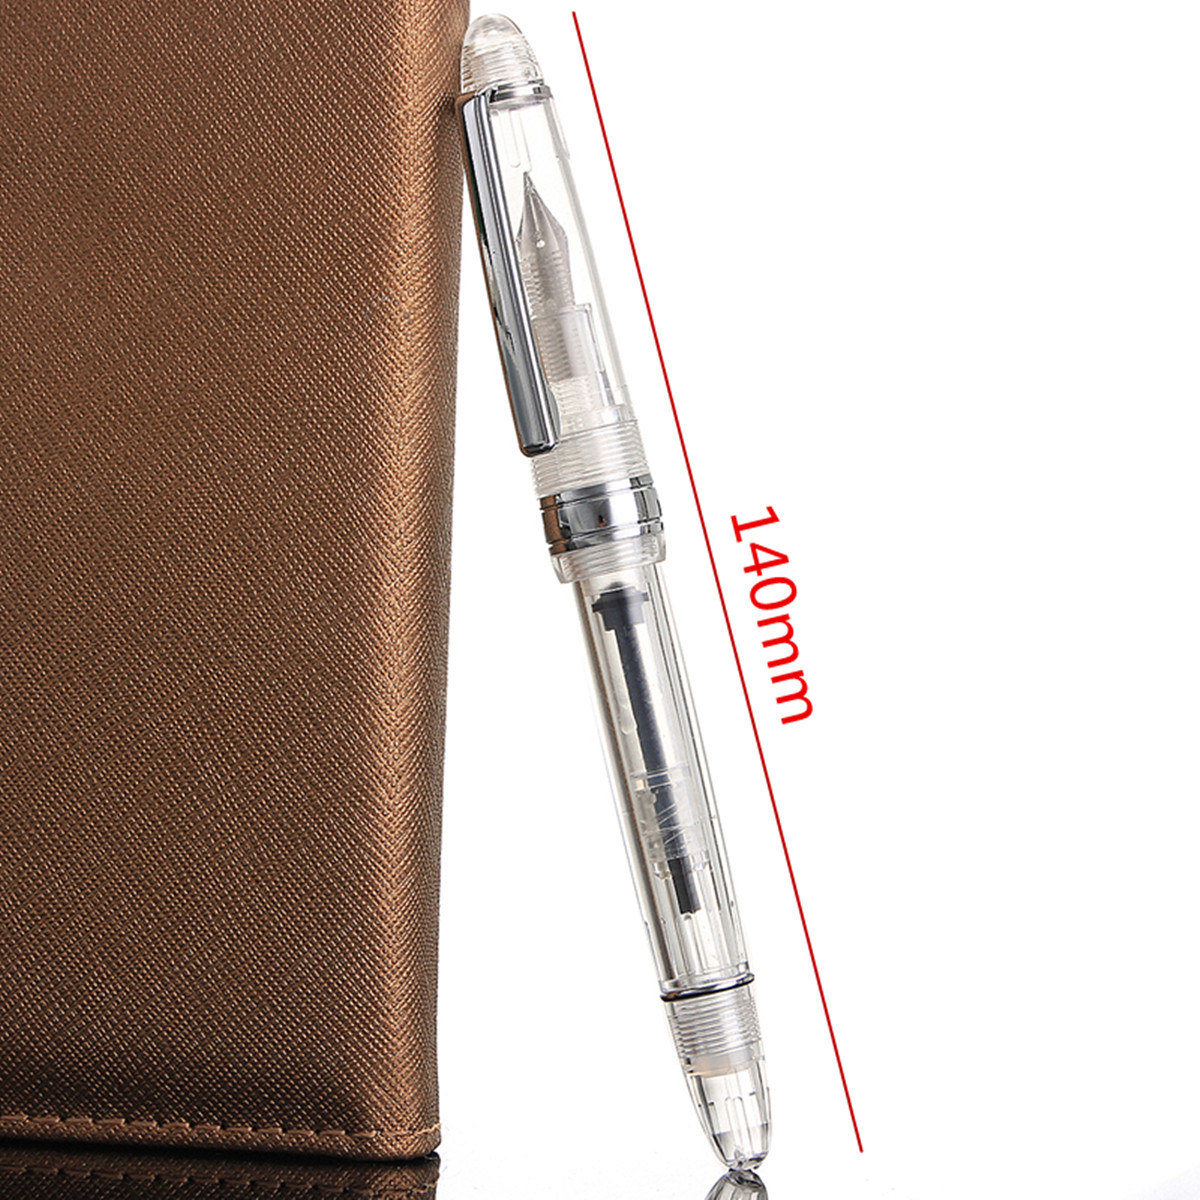 038mm05mm-Iridium-Fine-Nib-Transparent-Fountain-Pen-With-Box-Smooth-Writting-Office-School-Supply-1286194